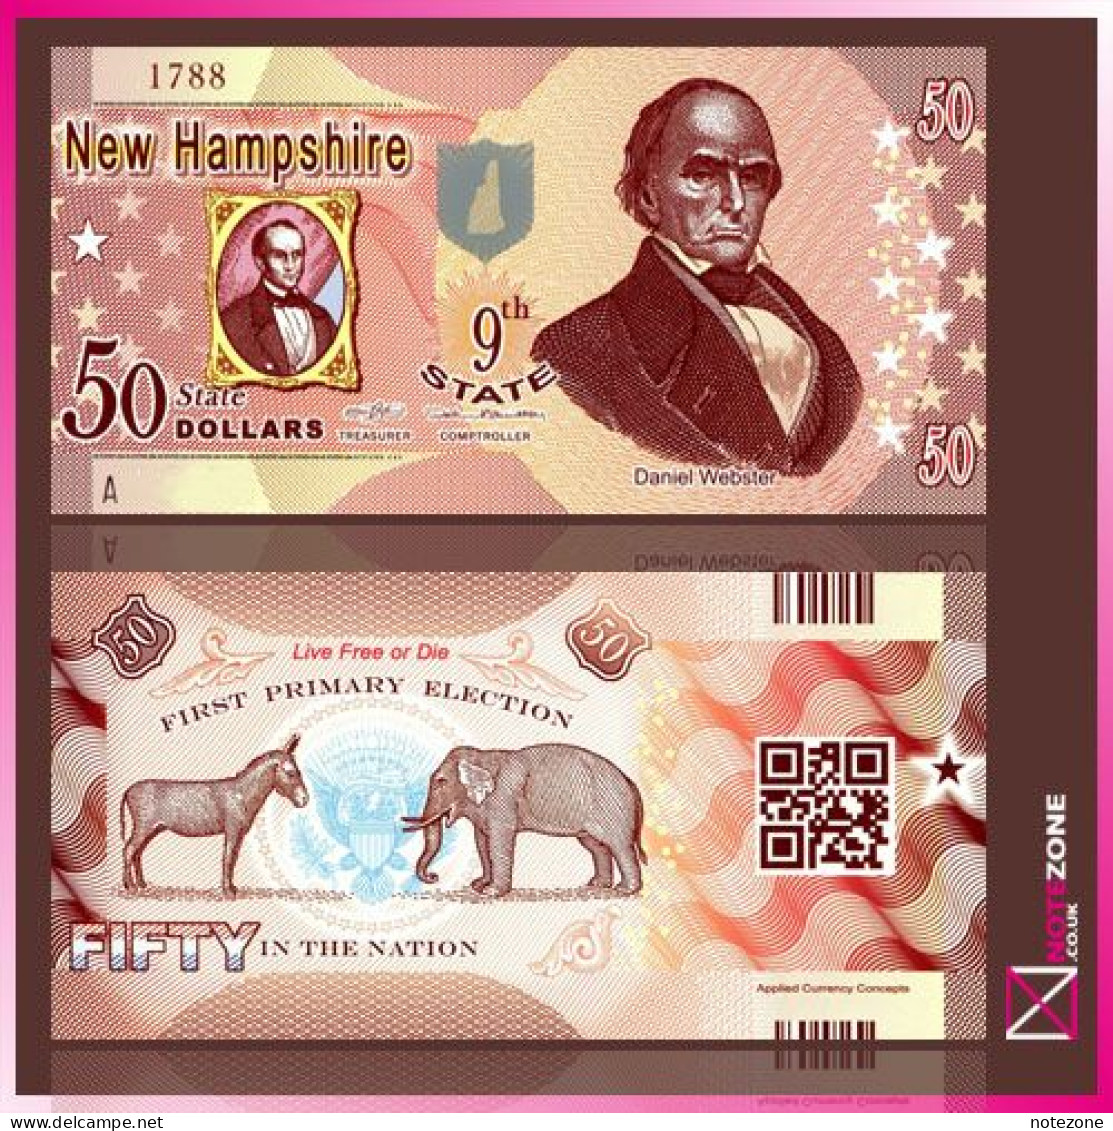 Thomas Stebbins USA $50 STATES New Hampshire 9th State Daniel Webster Polymer Fantasy Private Banknote Note - Collezioni